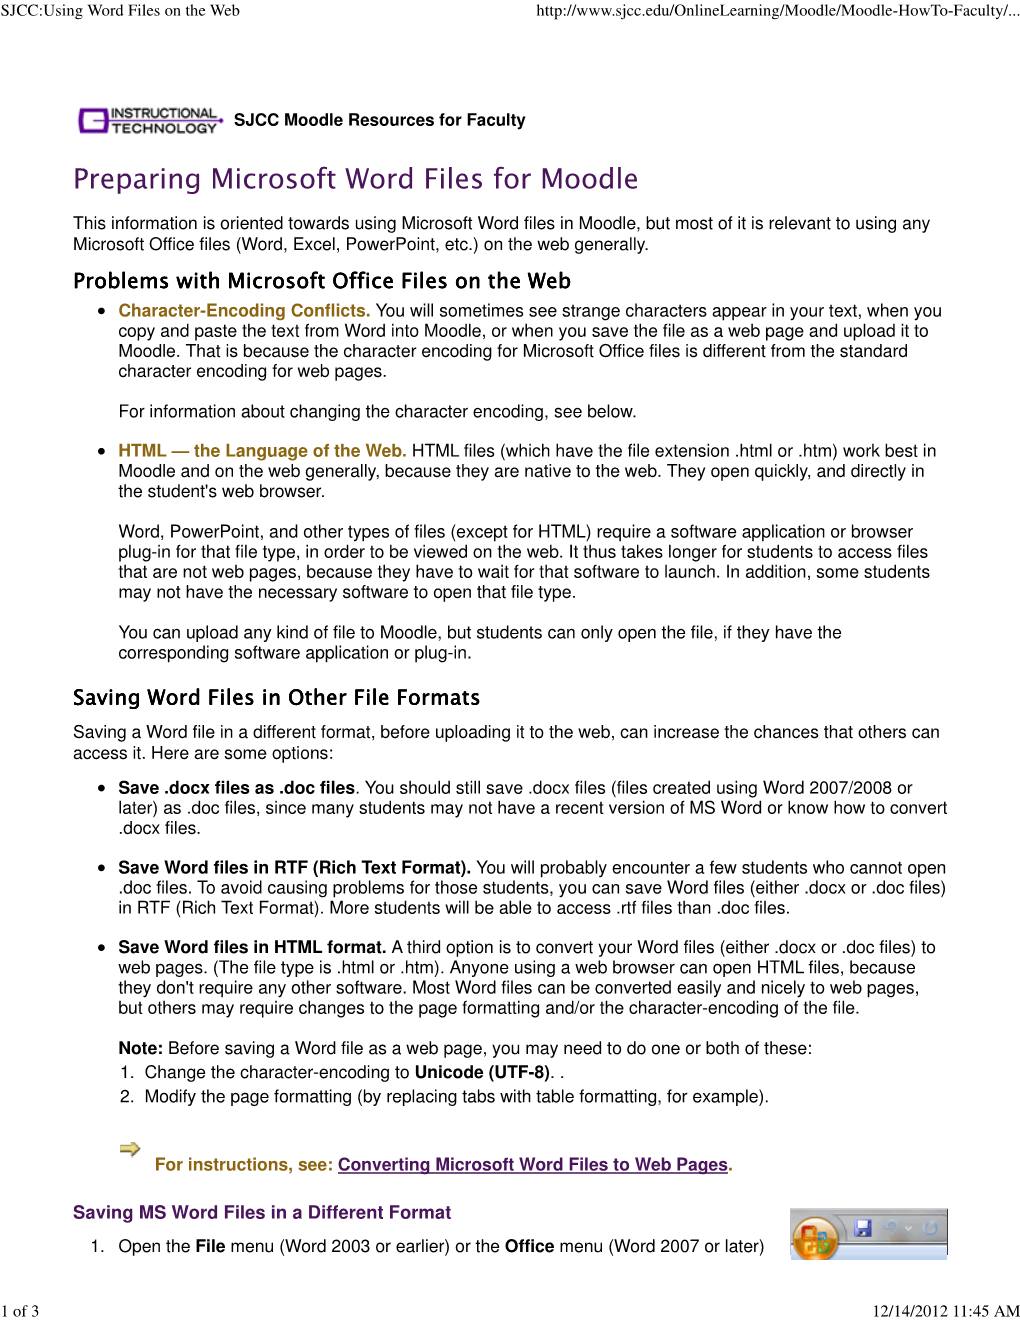 Preparing Microsoft Word Files for Moodle